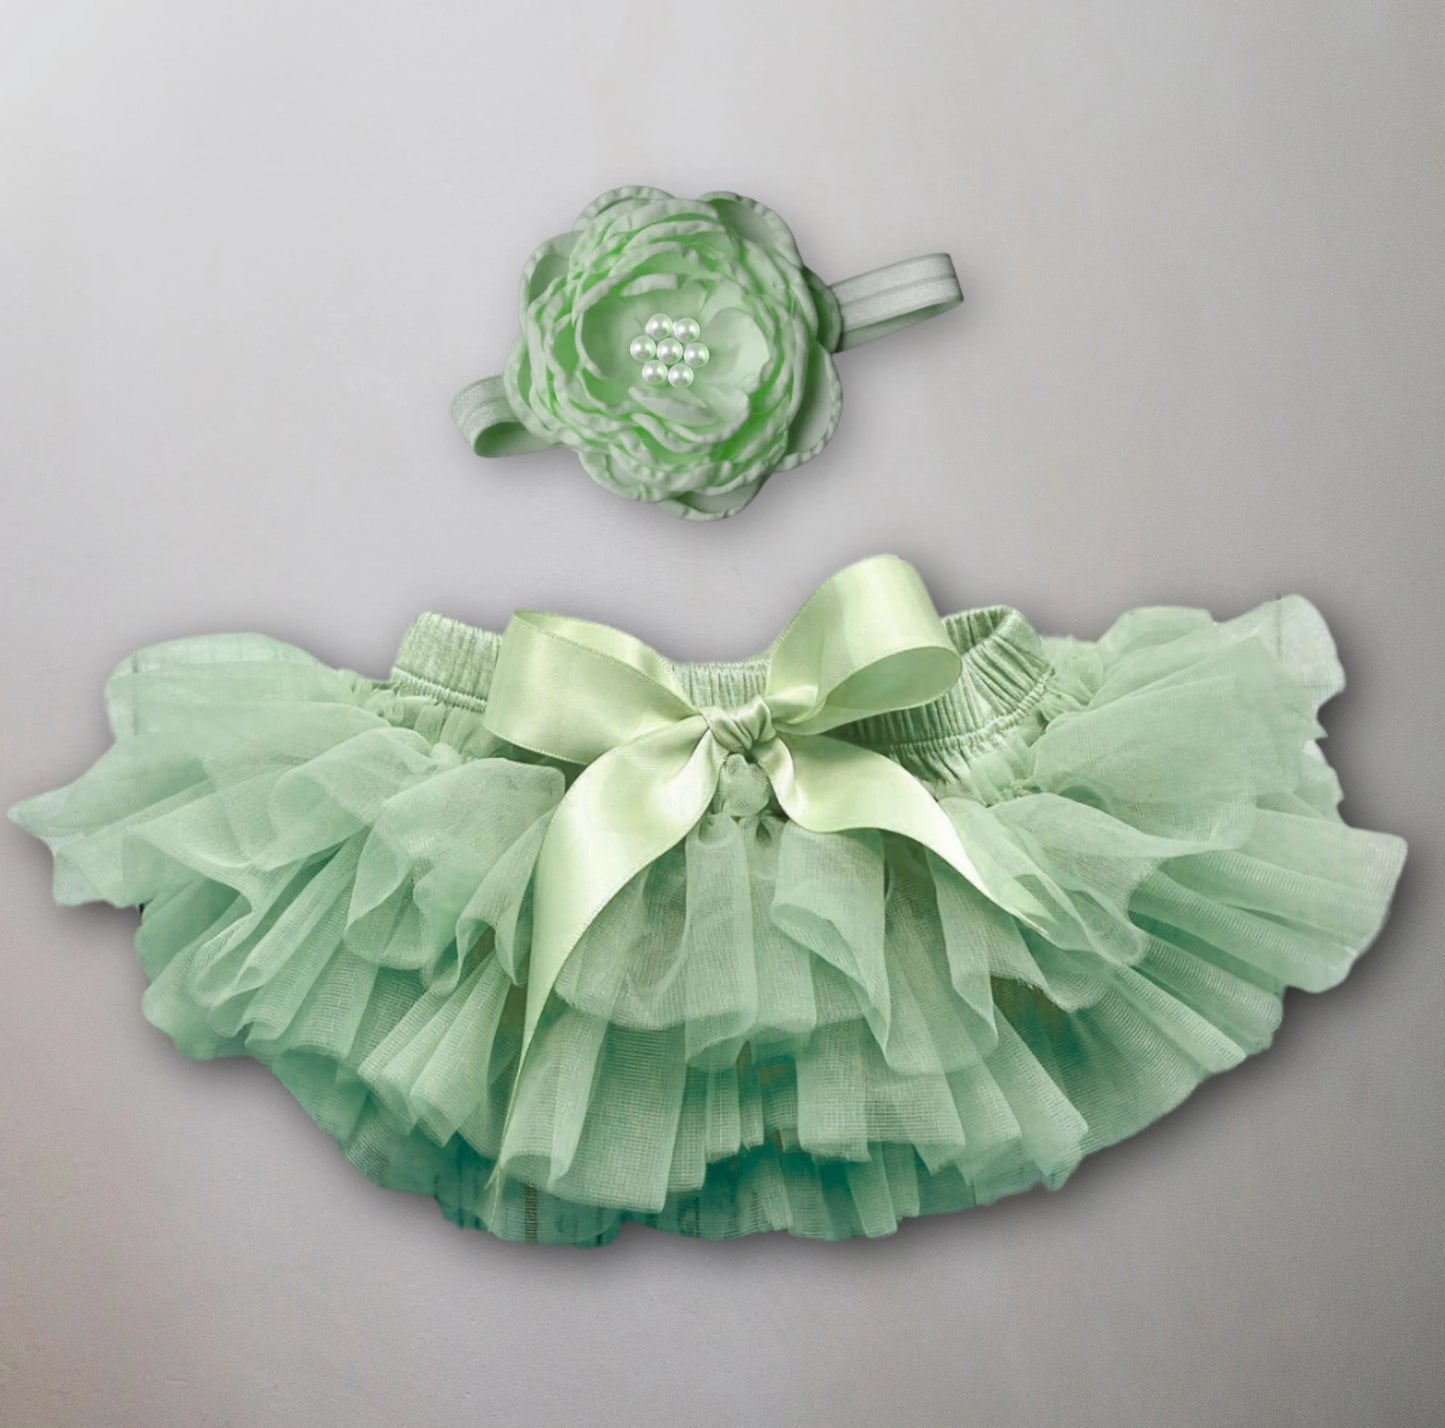 Green tutu skirt with matching headband